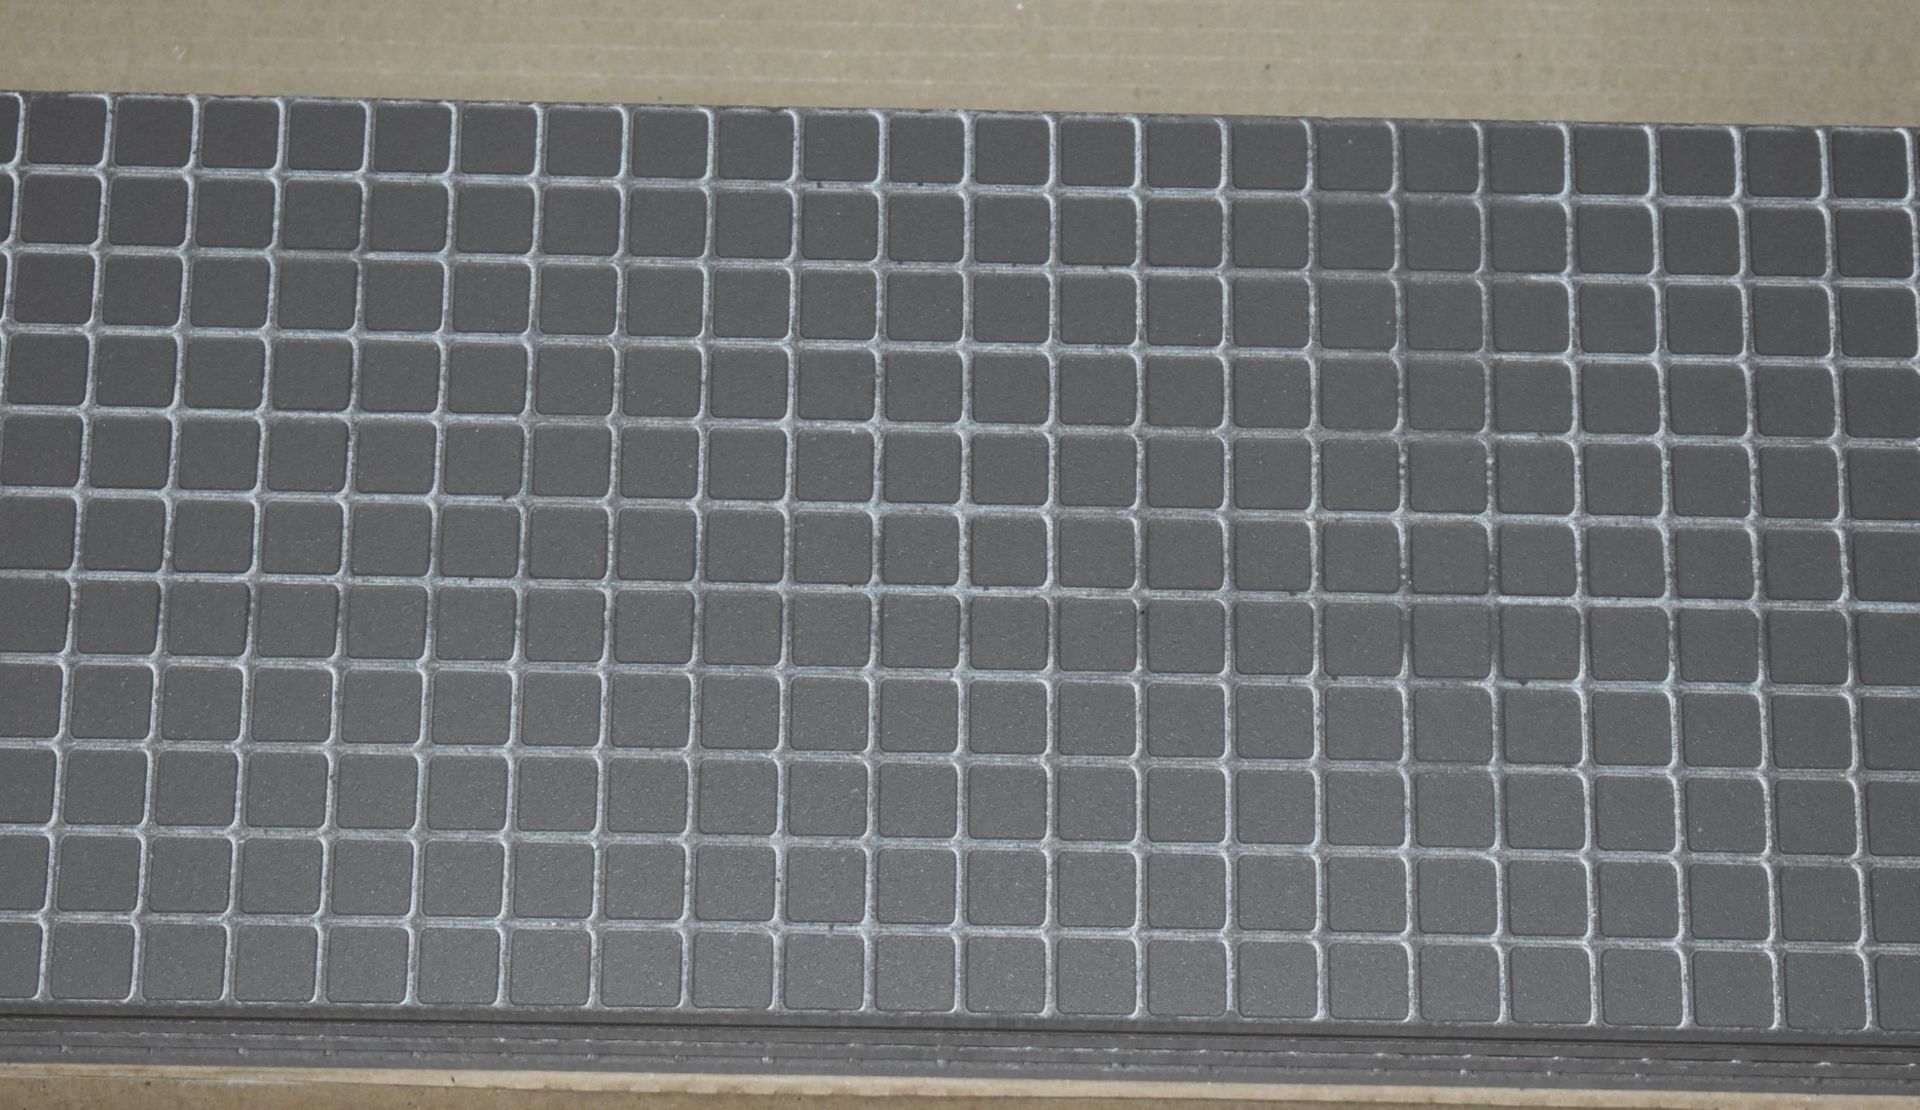 12 x Boxes of RAK Porcelain Floor or Wall Tiles - M Project Wood Design in Dark Grey - 19.5 x 120 cm - Image 2 of 10